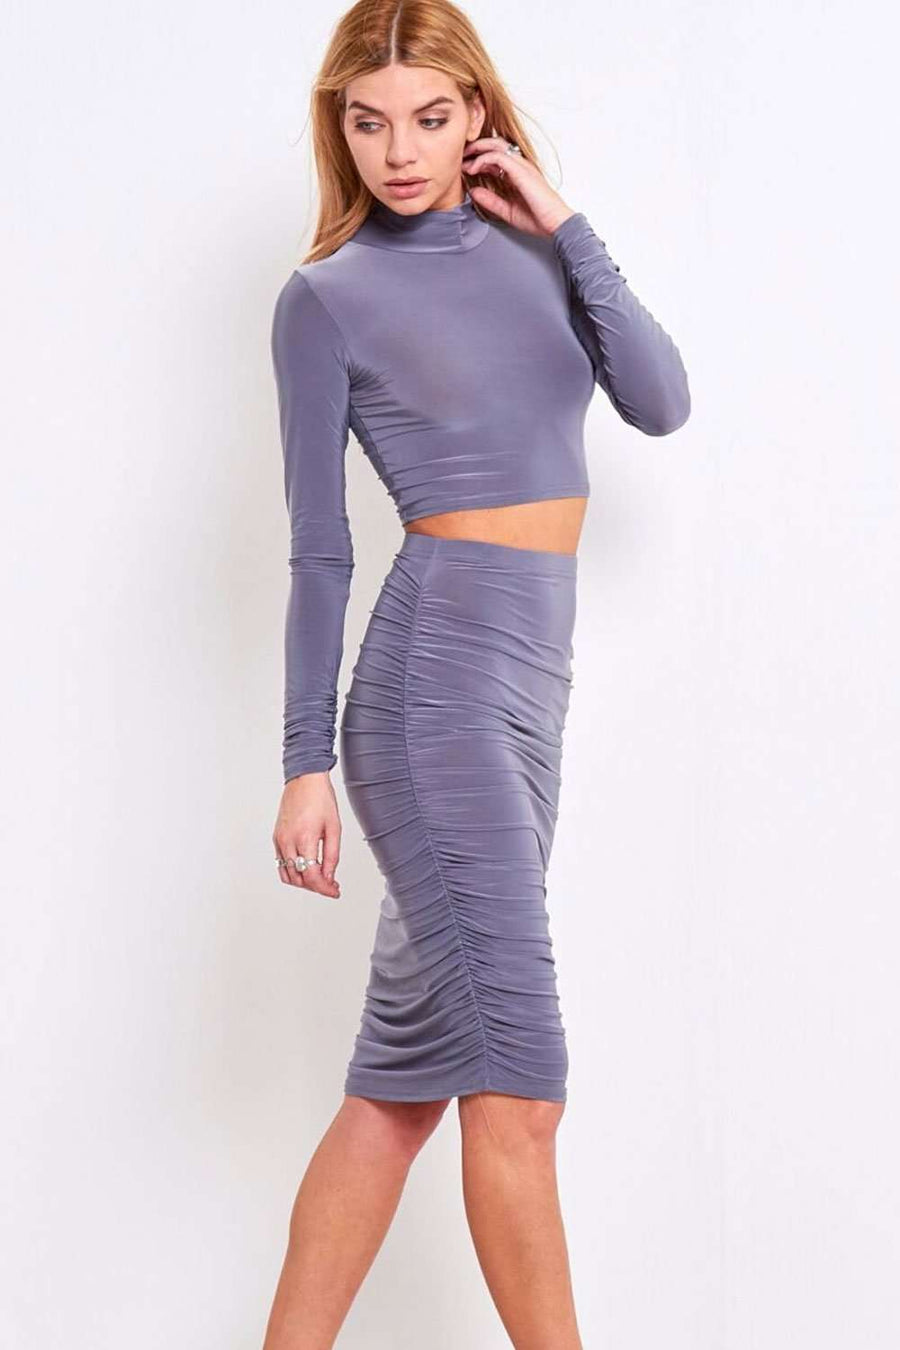 Sallie Long Sleeve Crop Top & Skirt Co Ord - bejealous-com